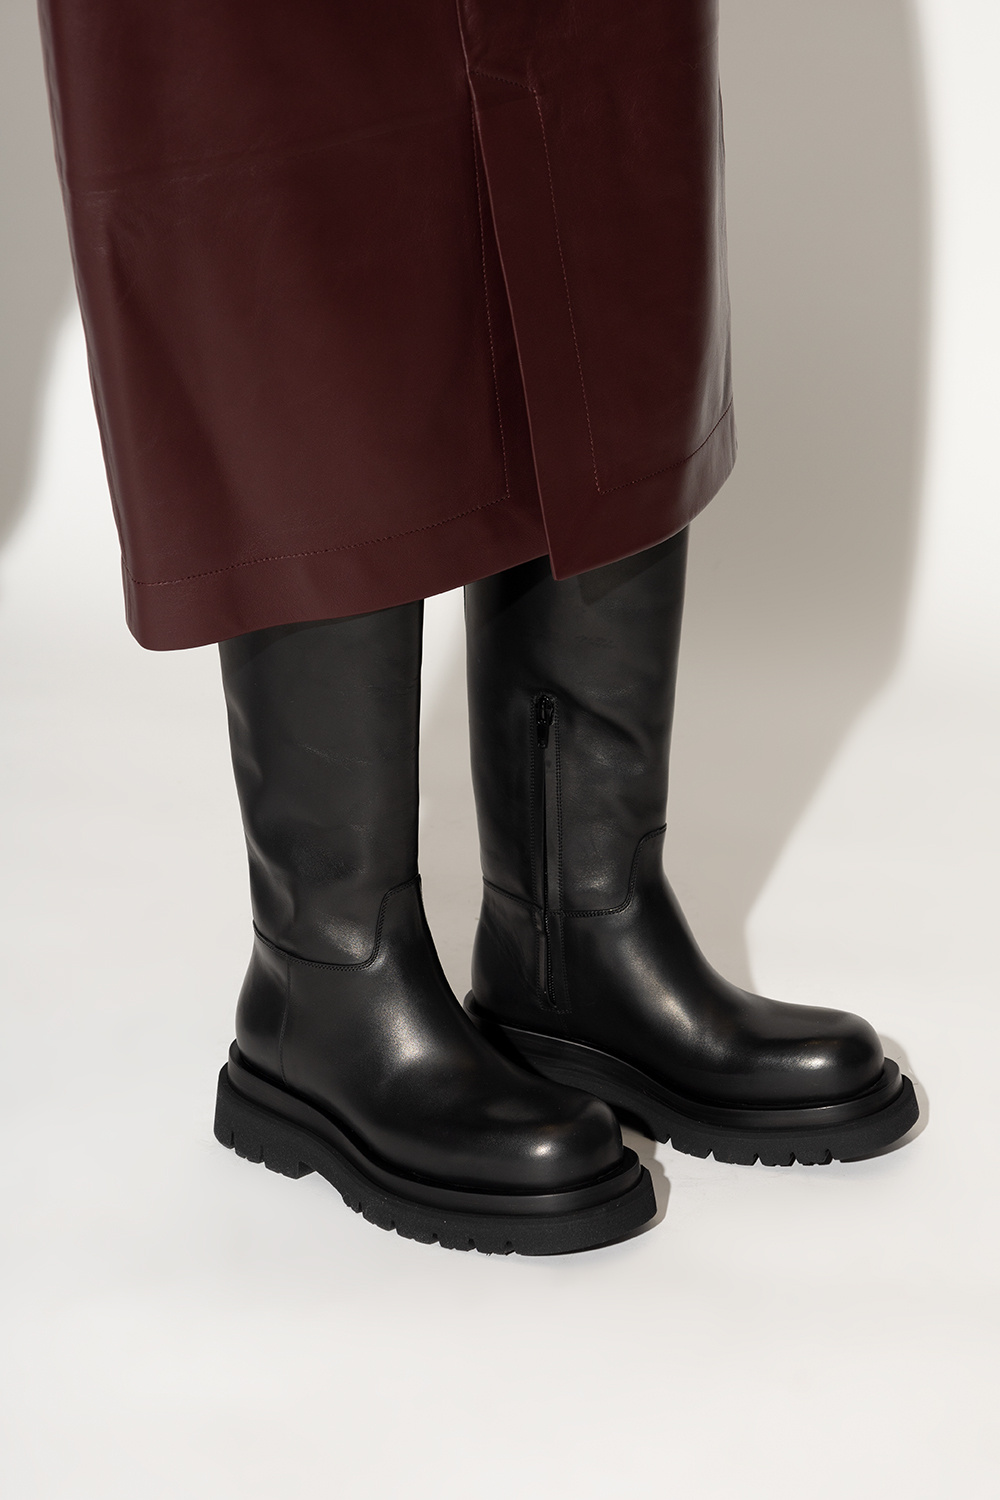 Bottega Veneta rollneck long-sleeve jumper - Black 'Lug' boots LEG 